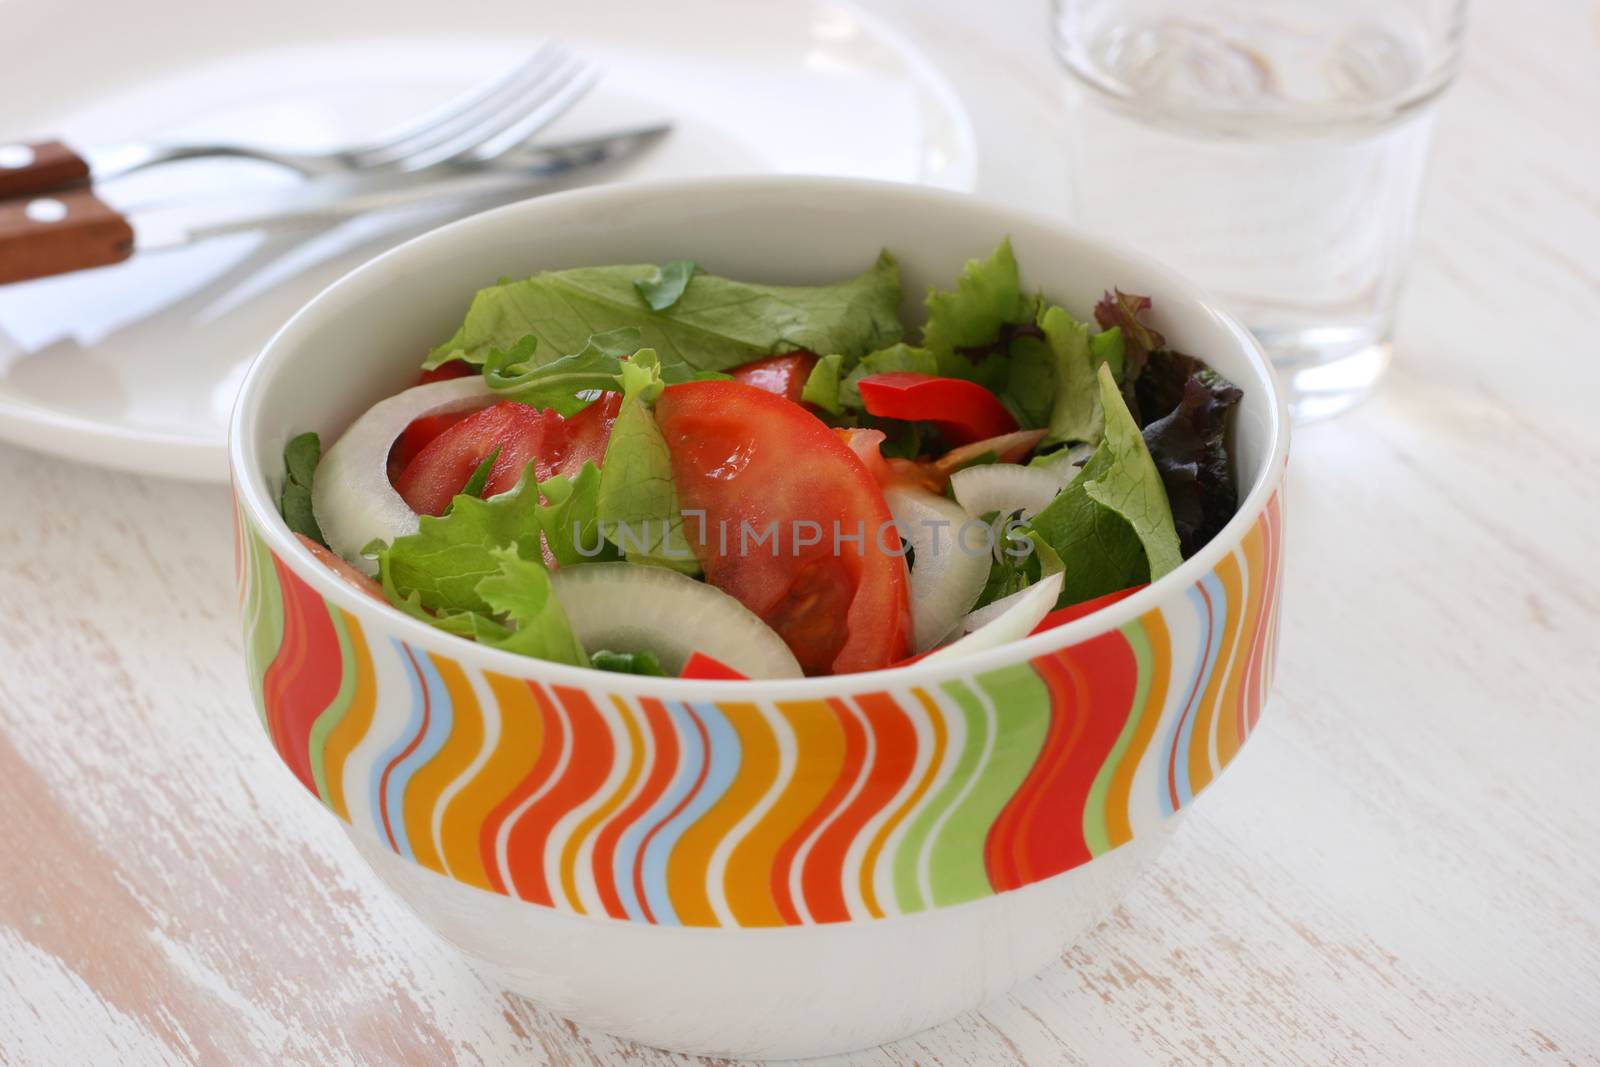 salad in bowl